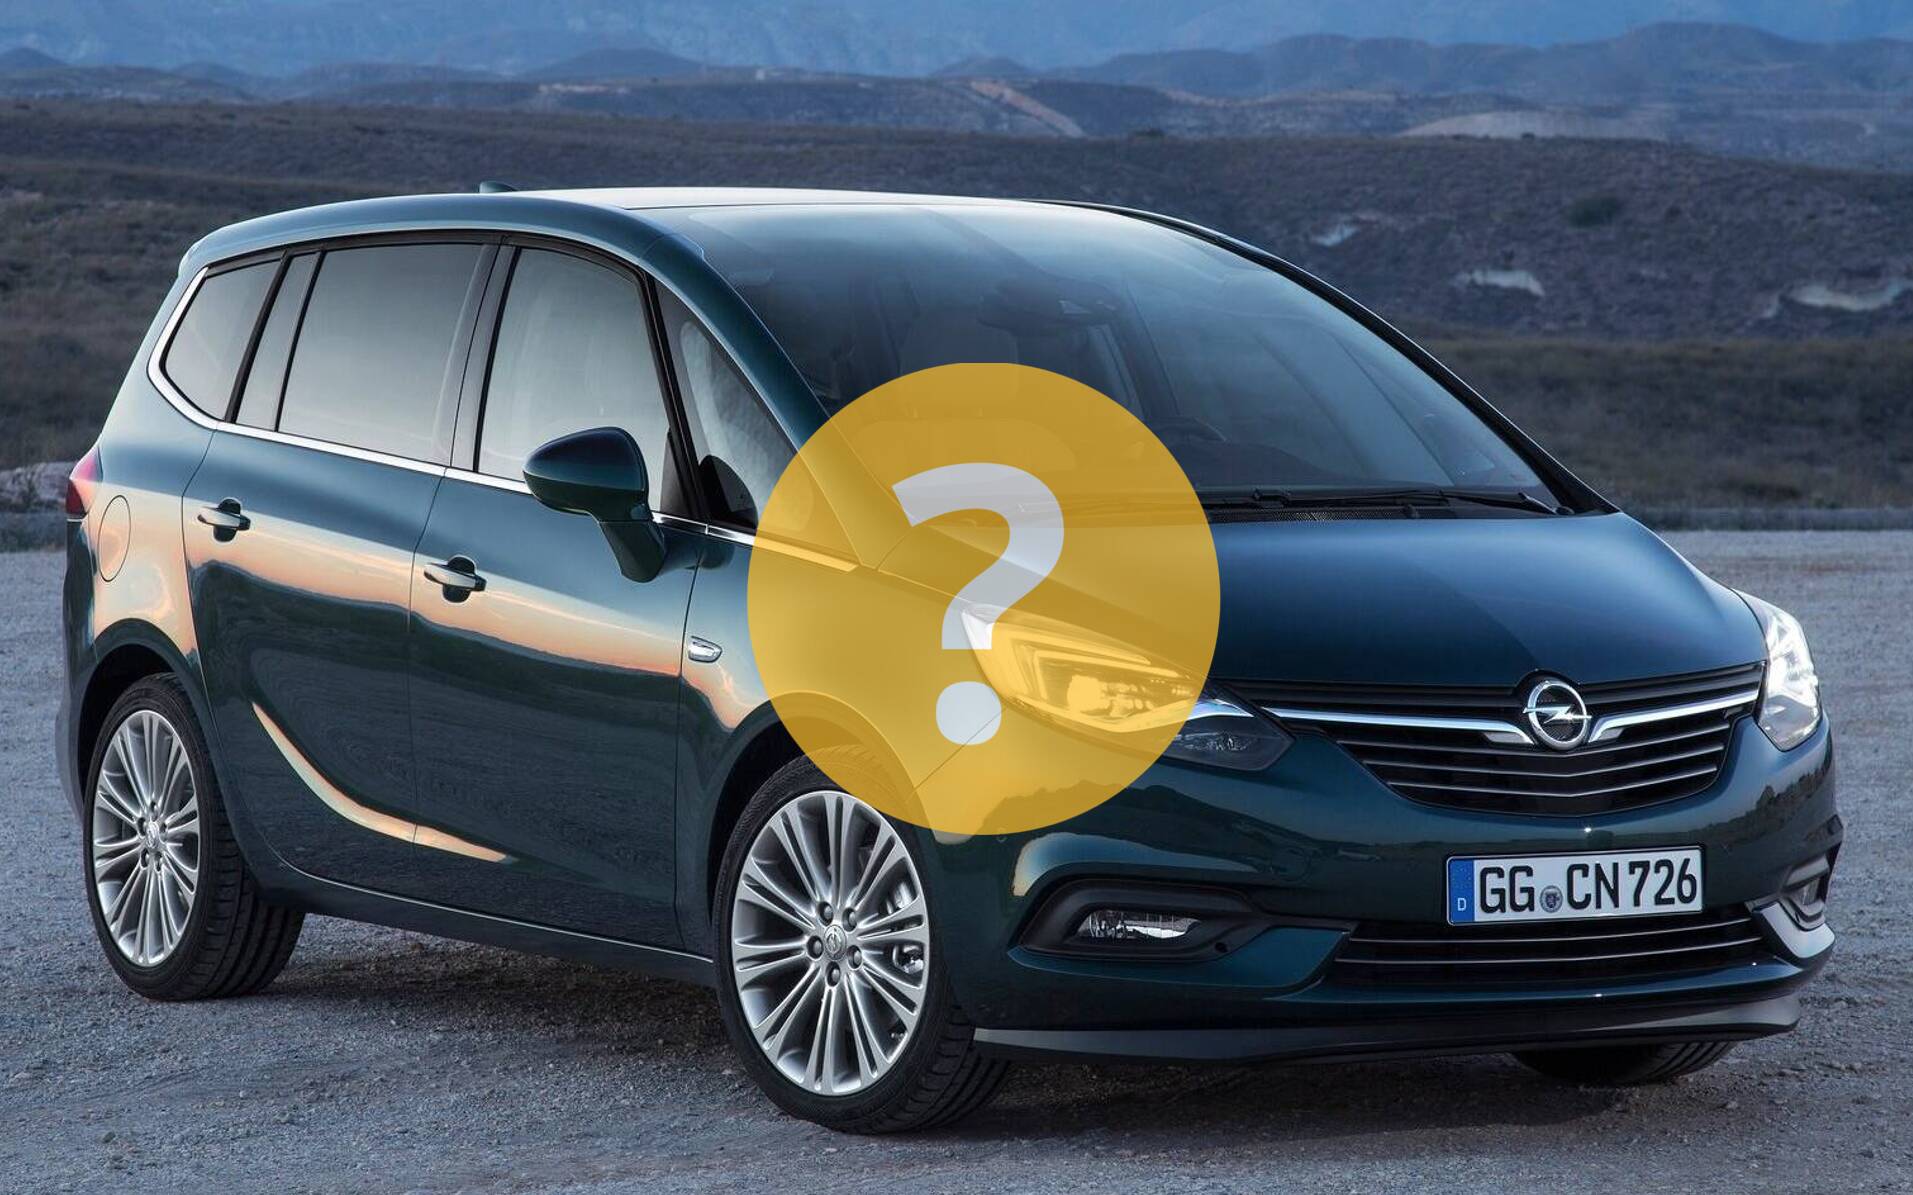 Peut-on comparer une Opel Zafira ou une Seat Alhambra à une Toyota